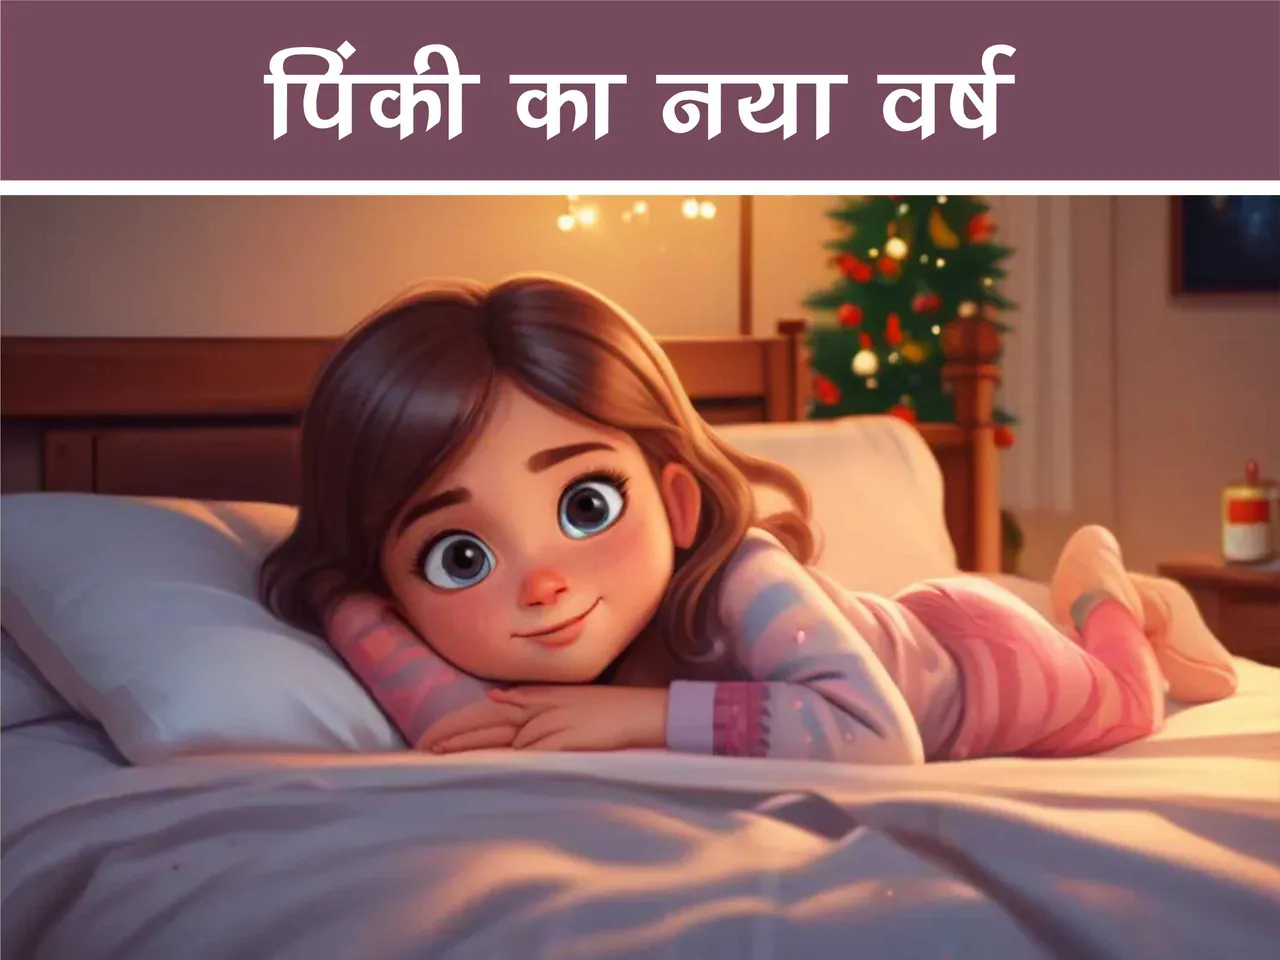 Little girl lying on bed AI cartoon Image